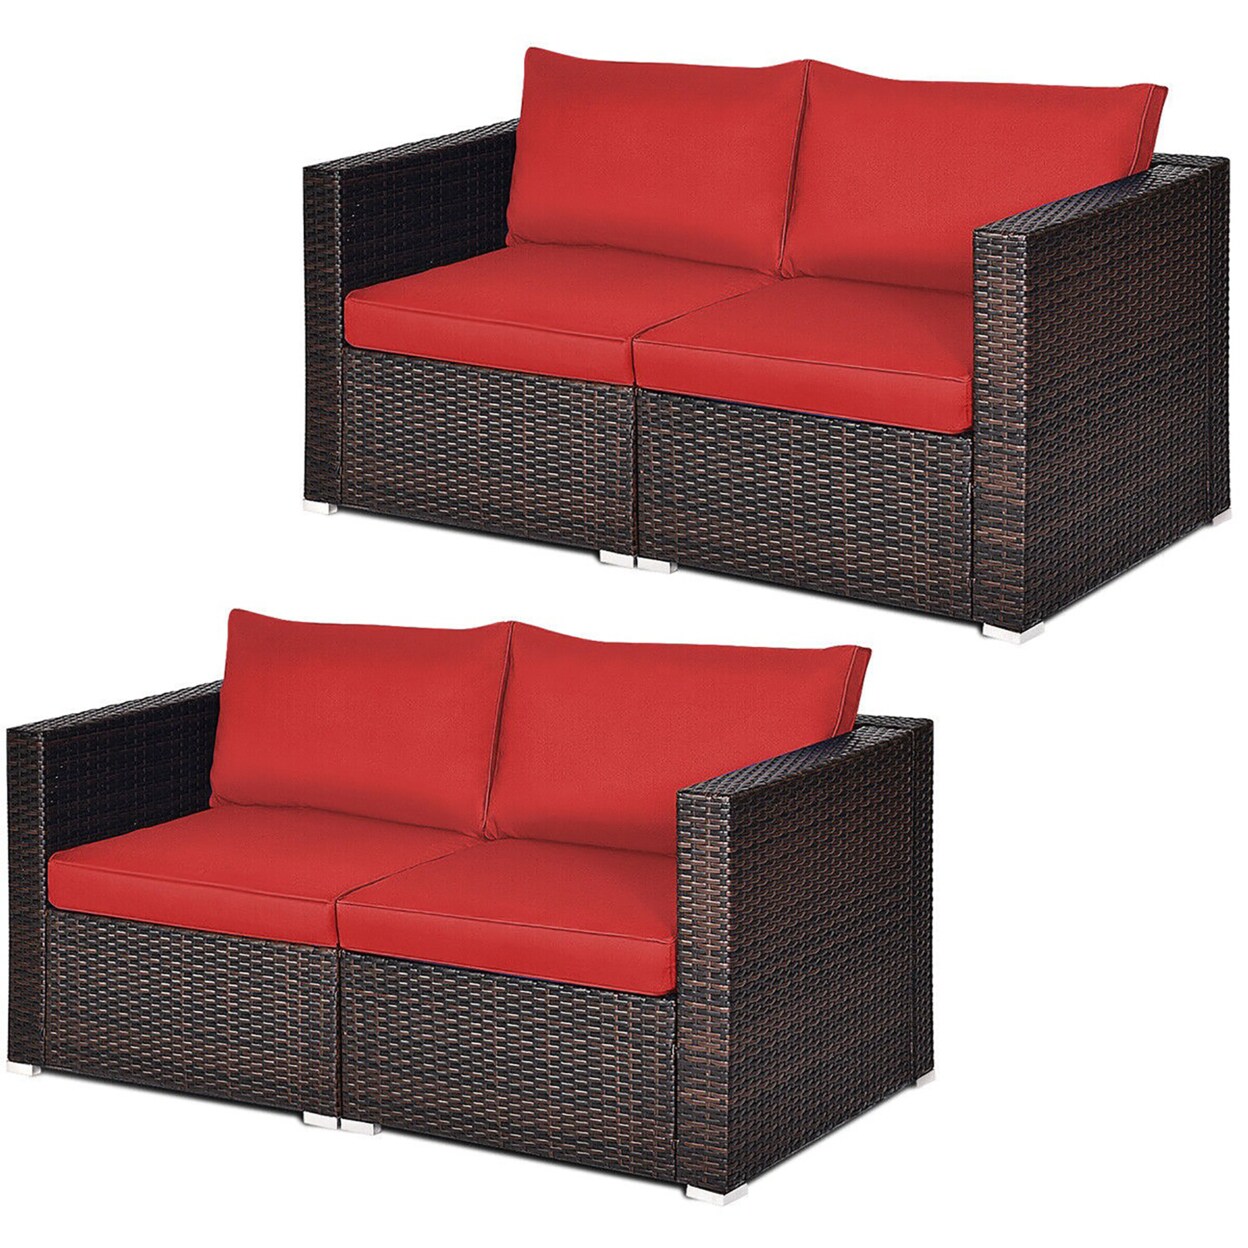 Gymax 4PCS Rattan Corner Sofa Set Patio Outdoor Furniture Set w/ Red Cushions